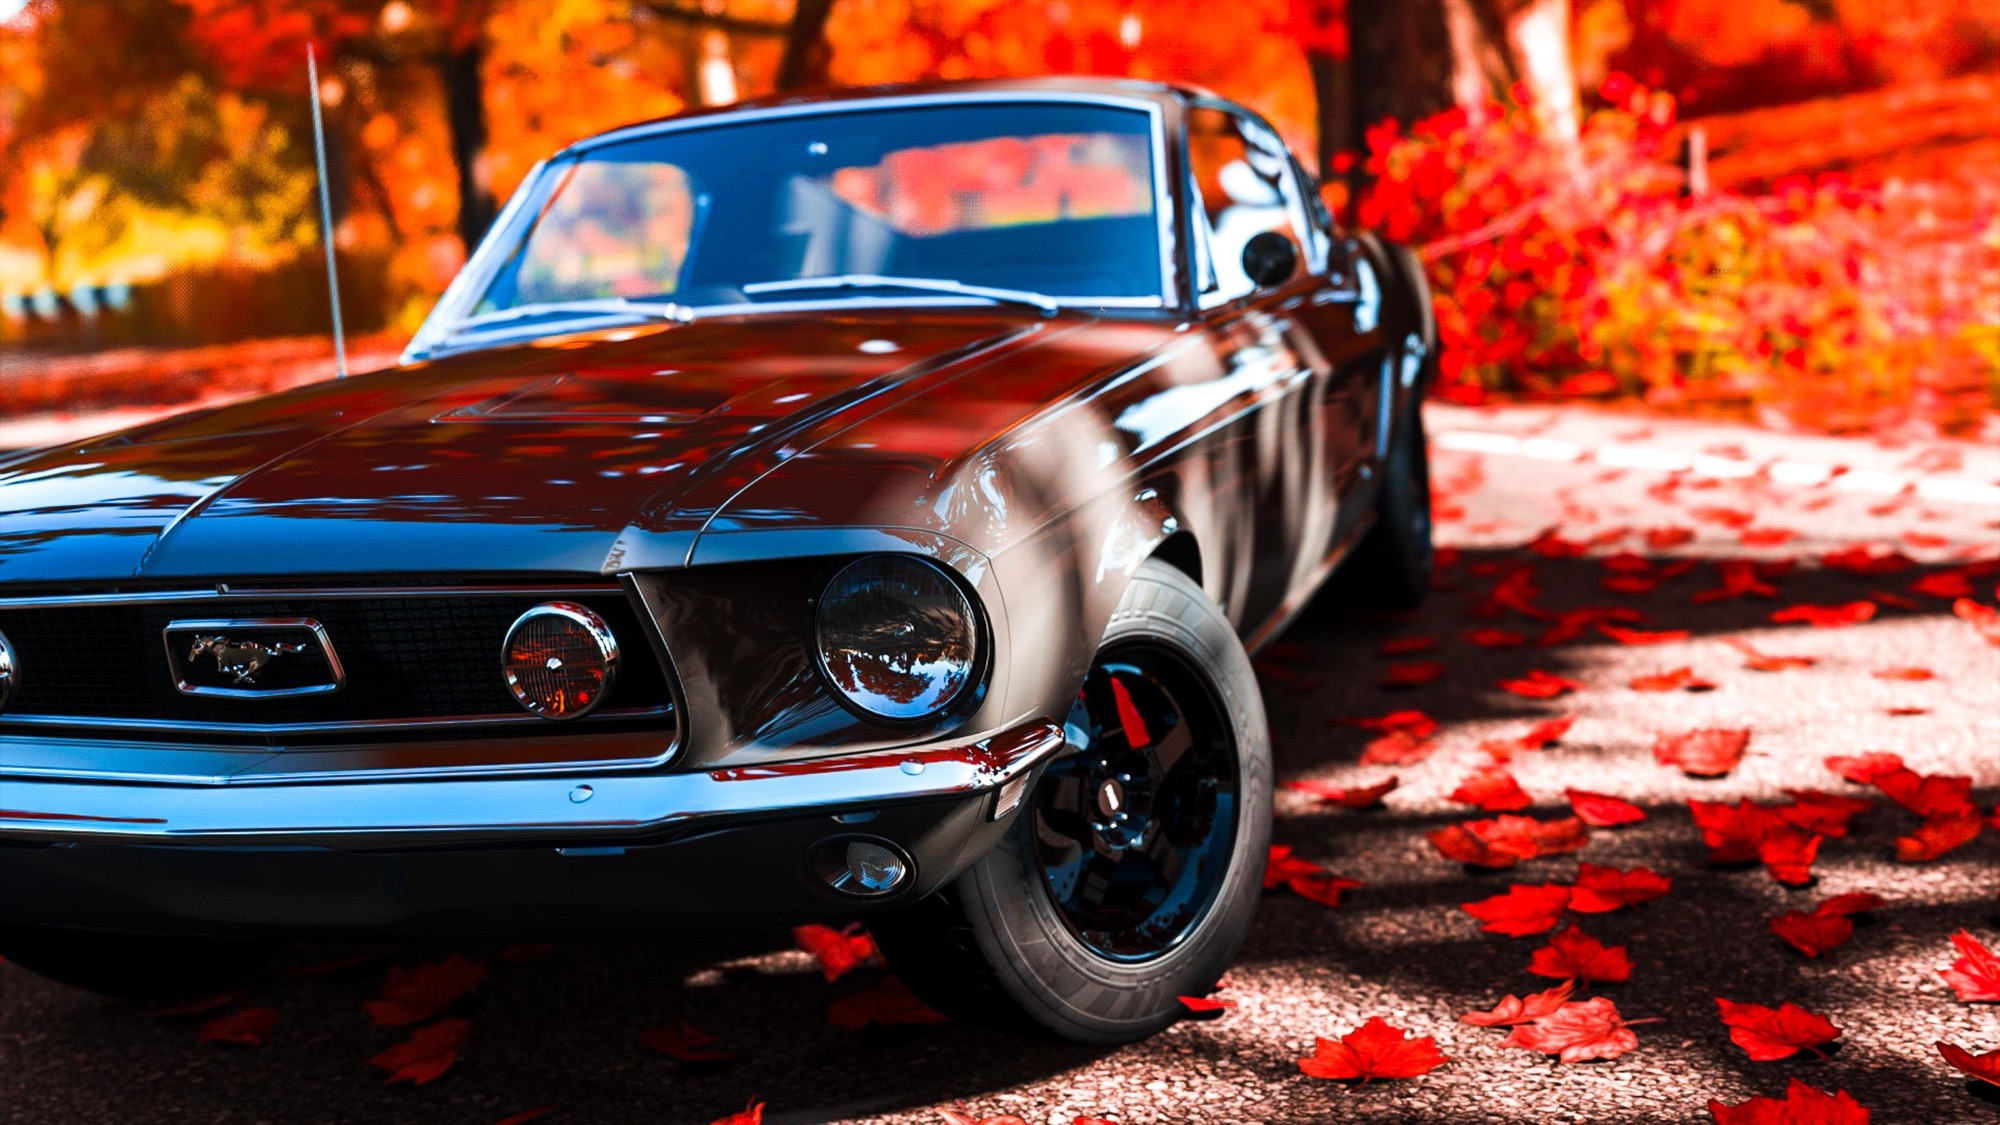 2000x1125 1920x1080] 68' Mustang : r/wallpaper